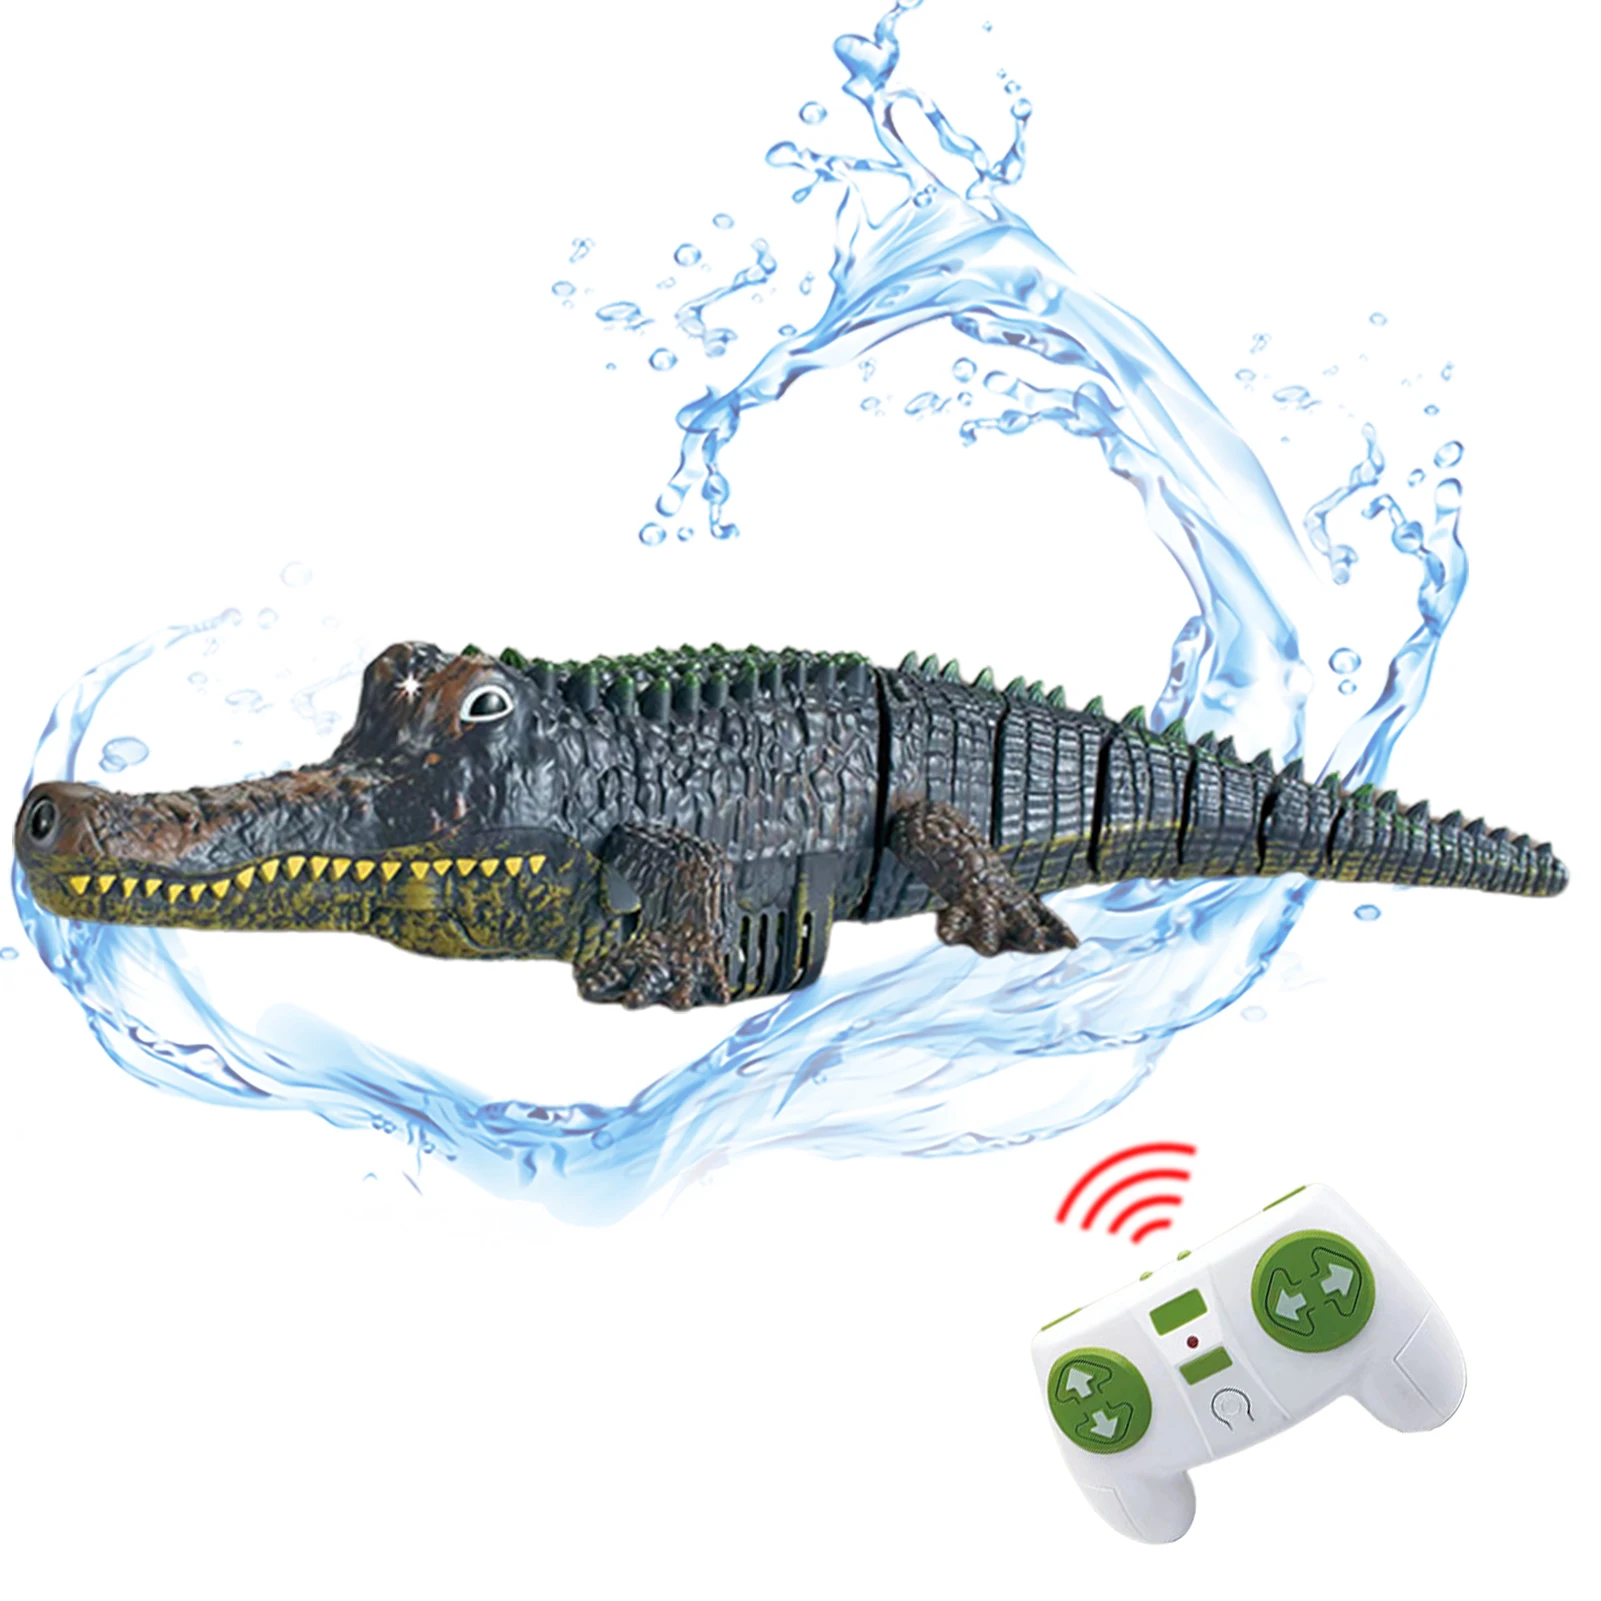 

Remote Control Crocodile Simulation Alligator RC Boats Prank Toys For Kids Watercraft Marine Ship For Lake Pool Pond